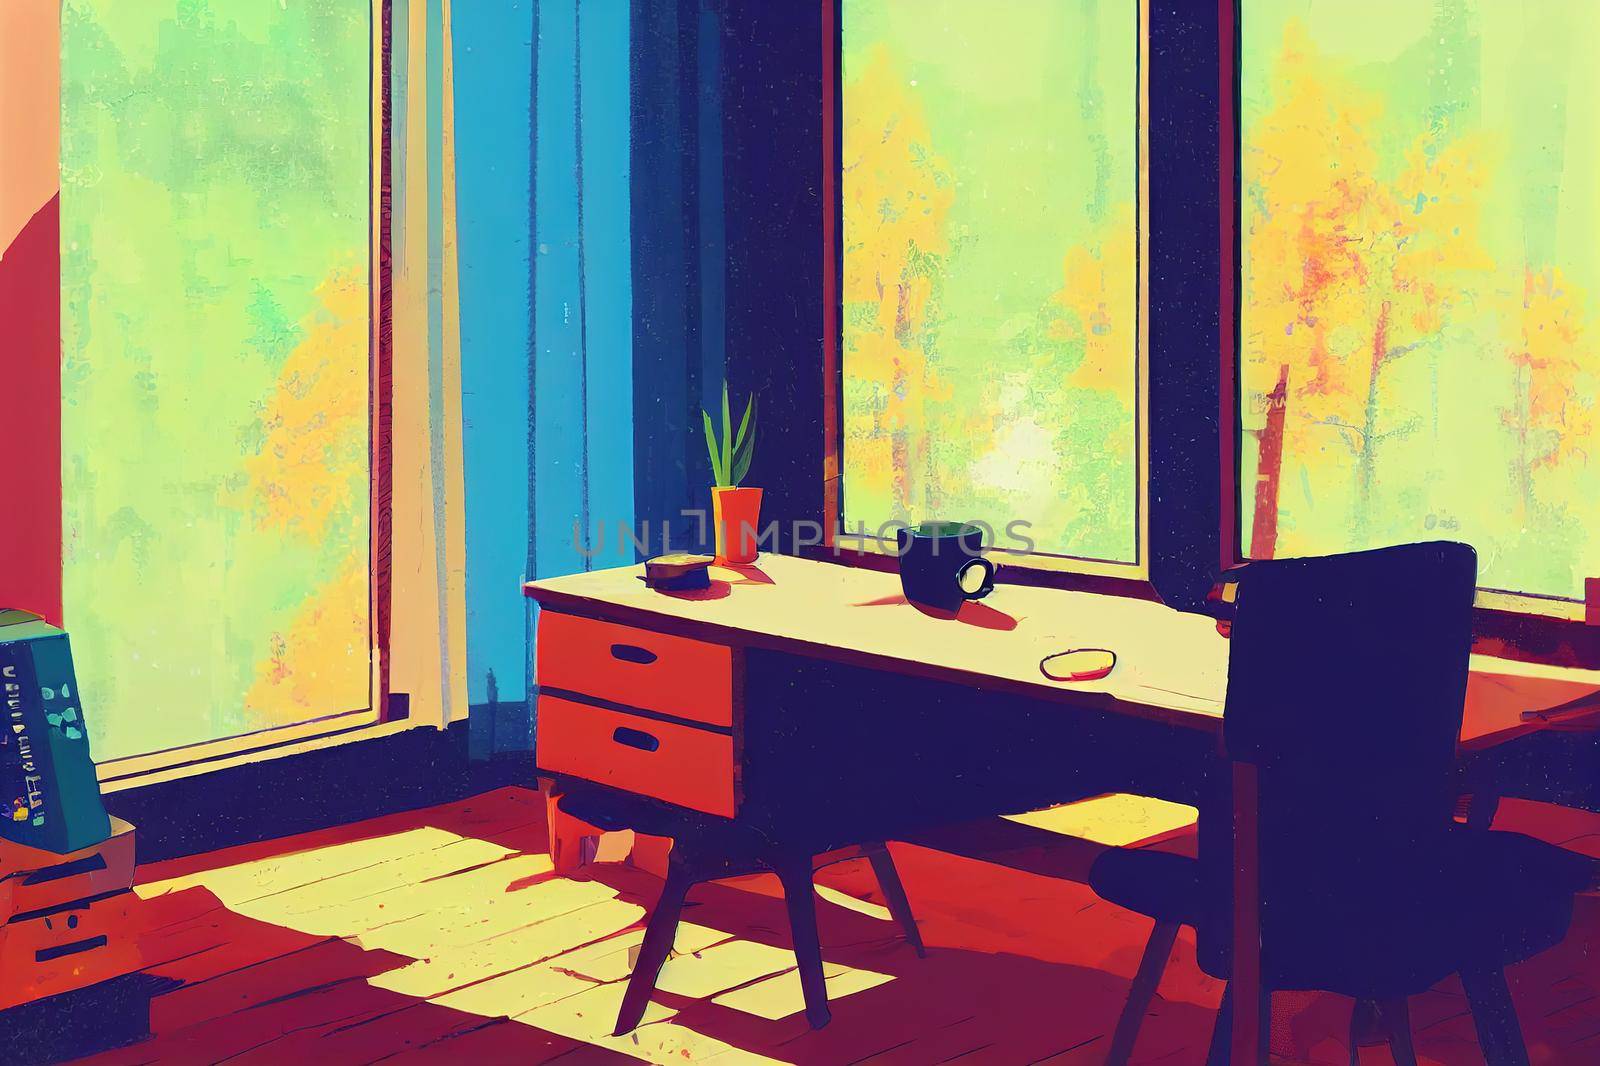 Calm lofi messy desk. Empty interior anime, manga style by 2ragon